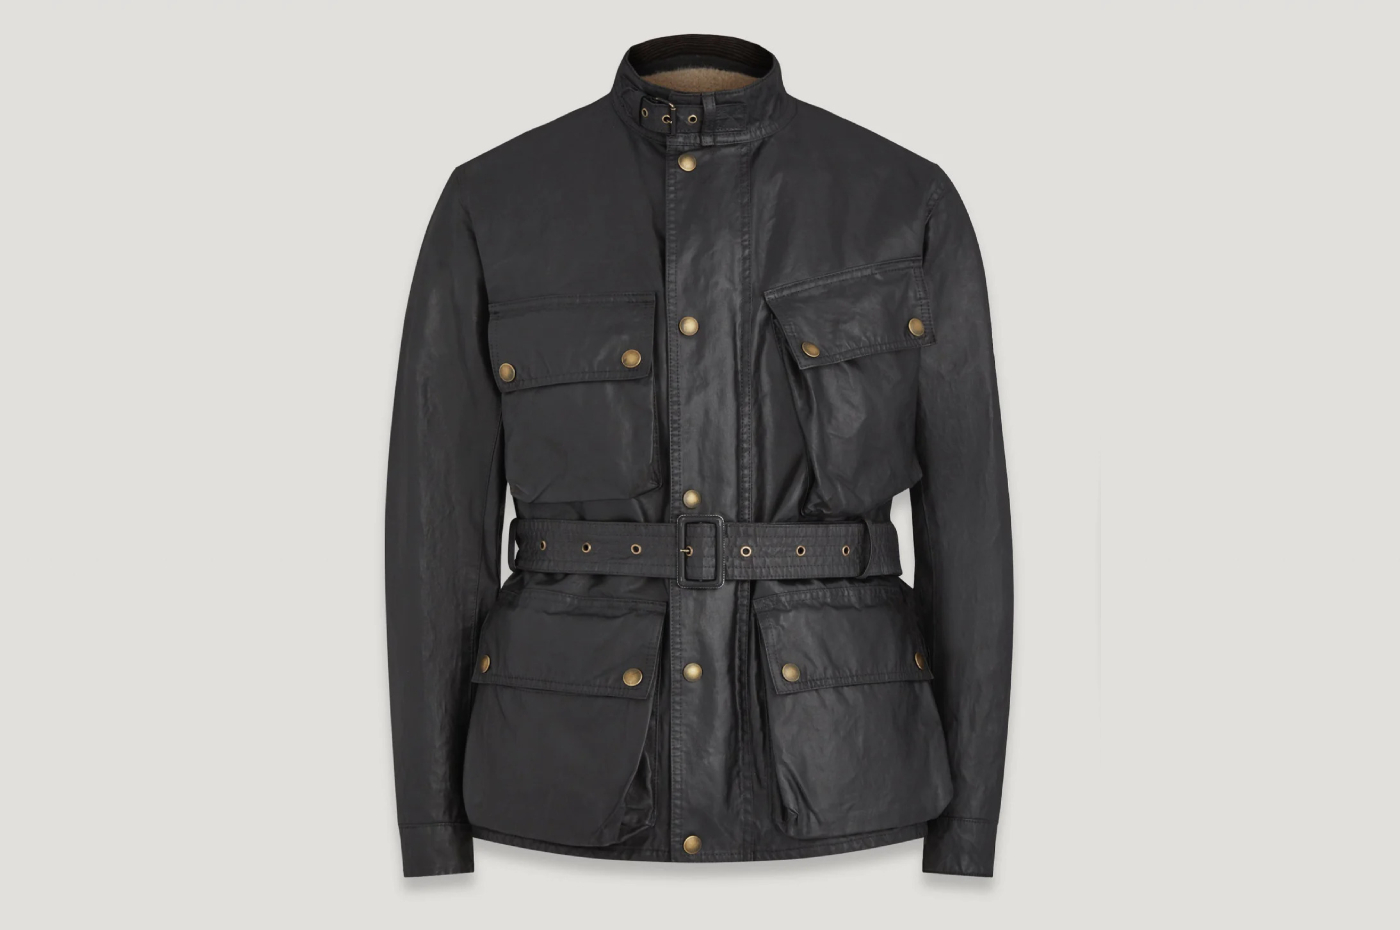 Belstaff Trialmaster Jacket: Is It Worth It? British Leather Jacket Review